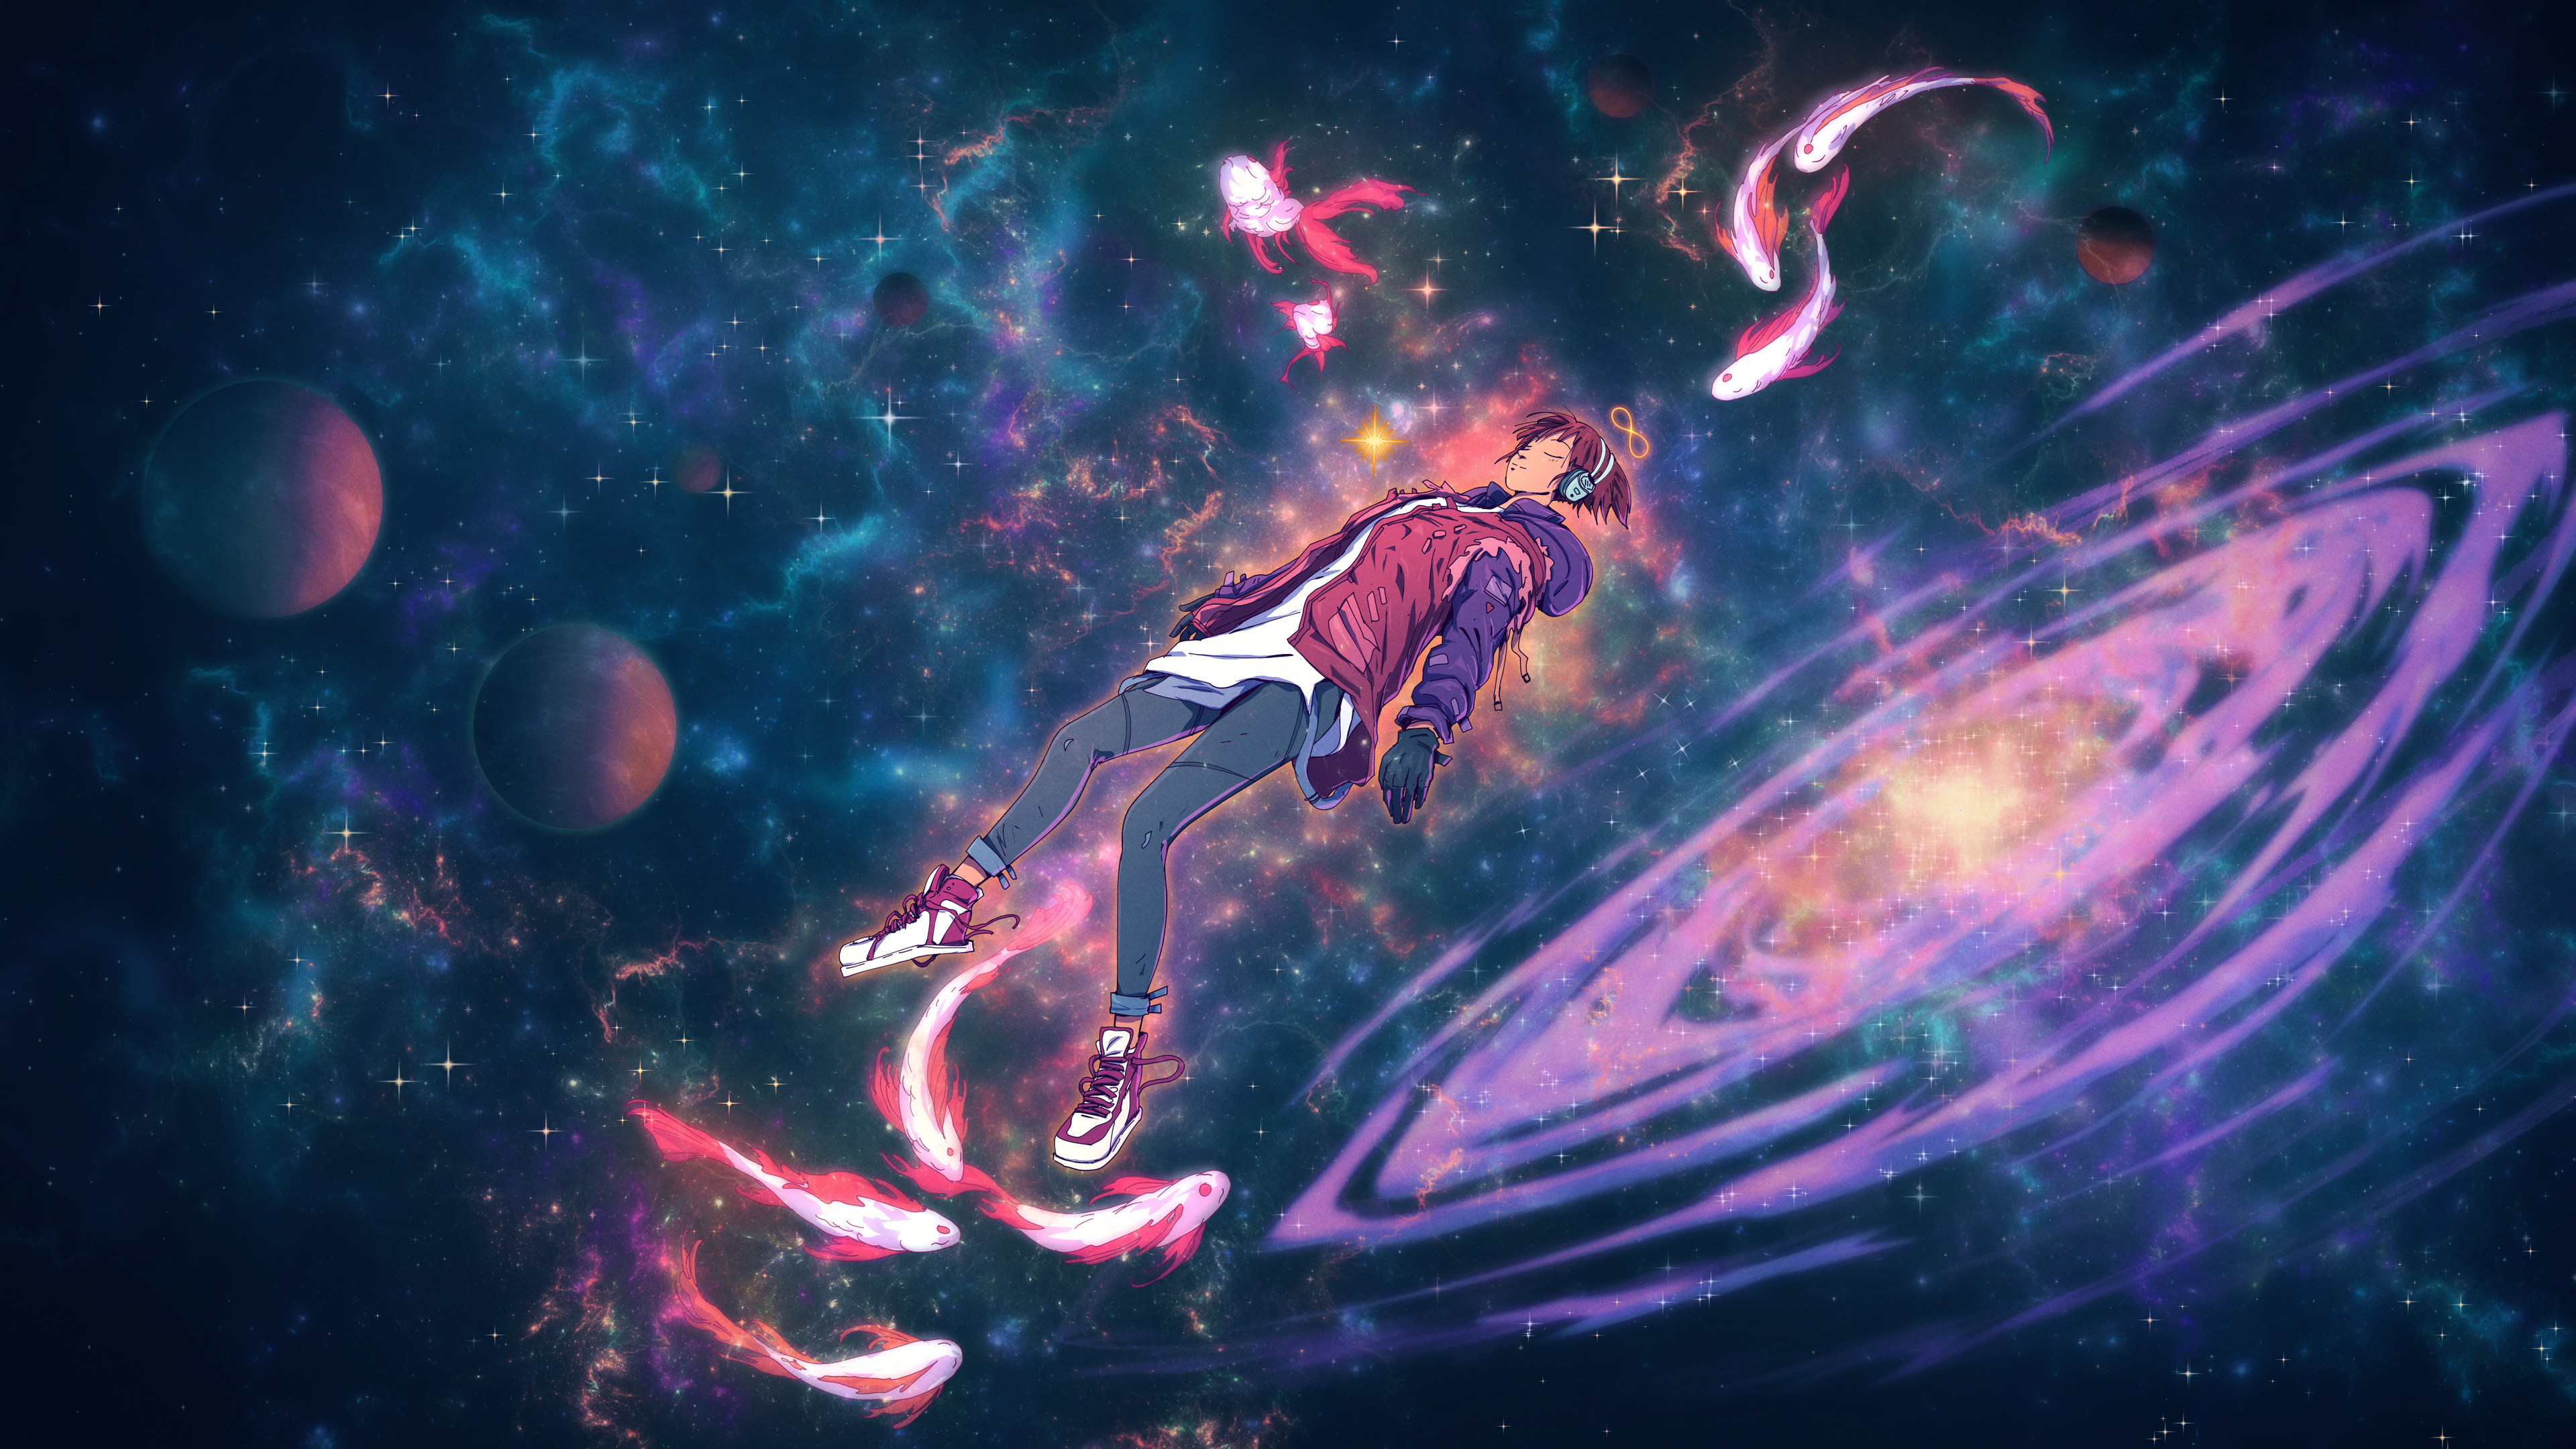 Christian Benavides Digital Art Fantasy Art Fish Surreal Space Headphones Artwork Stars Planet Galax 3840x2160